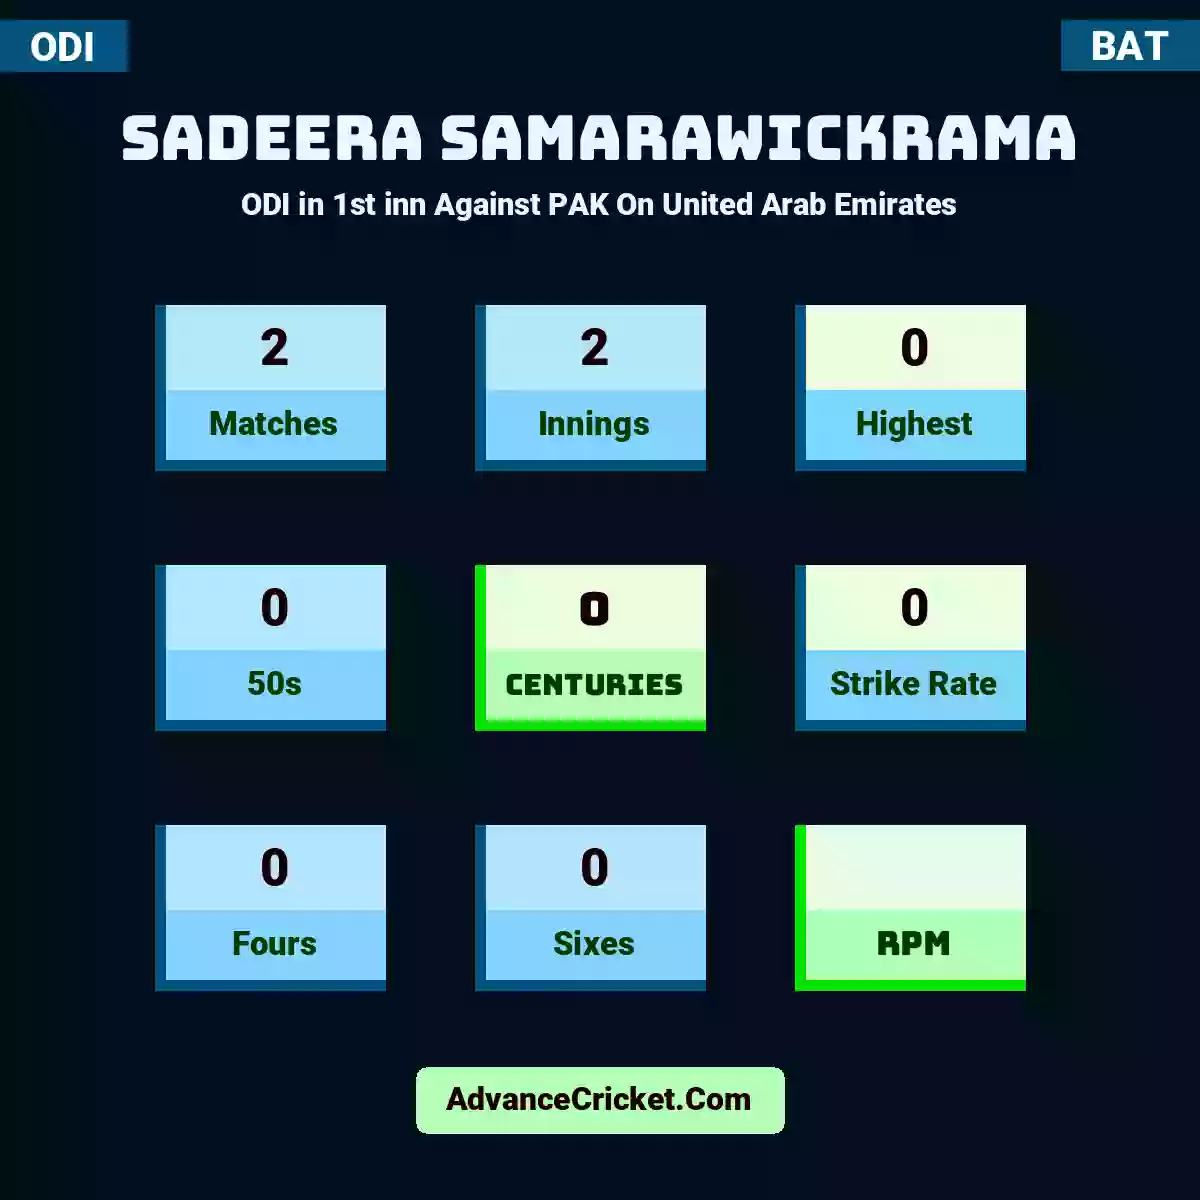 Sadeera Samarawickrama ODI  in 1st inn Against PAK On United Arab Emirates, Sadeera Samarawickrama played 2 matches, scored 0 runs as highest, 0 half-centuries, and 0 centuries, with a strike rate of 0. S.Samarawickrama hit 0 fours and 0 sixes.